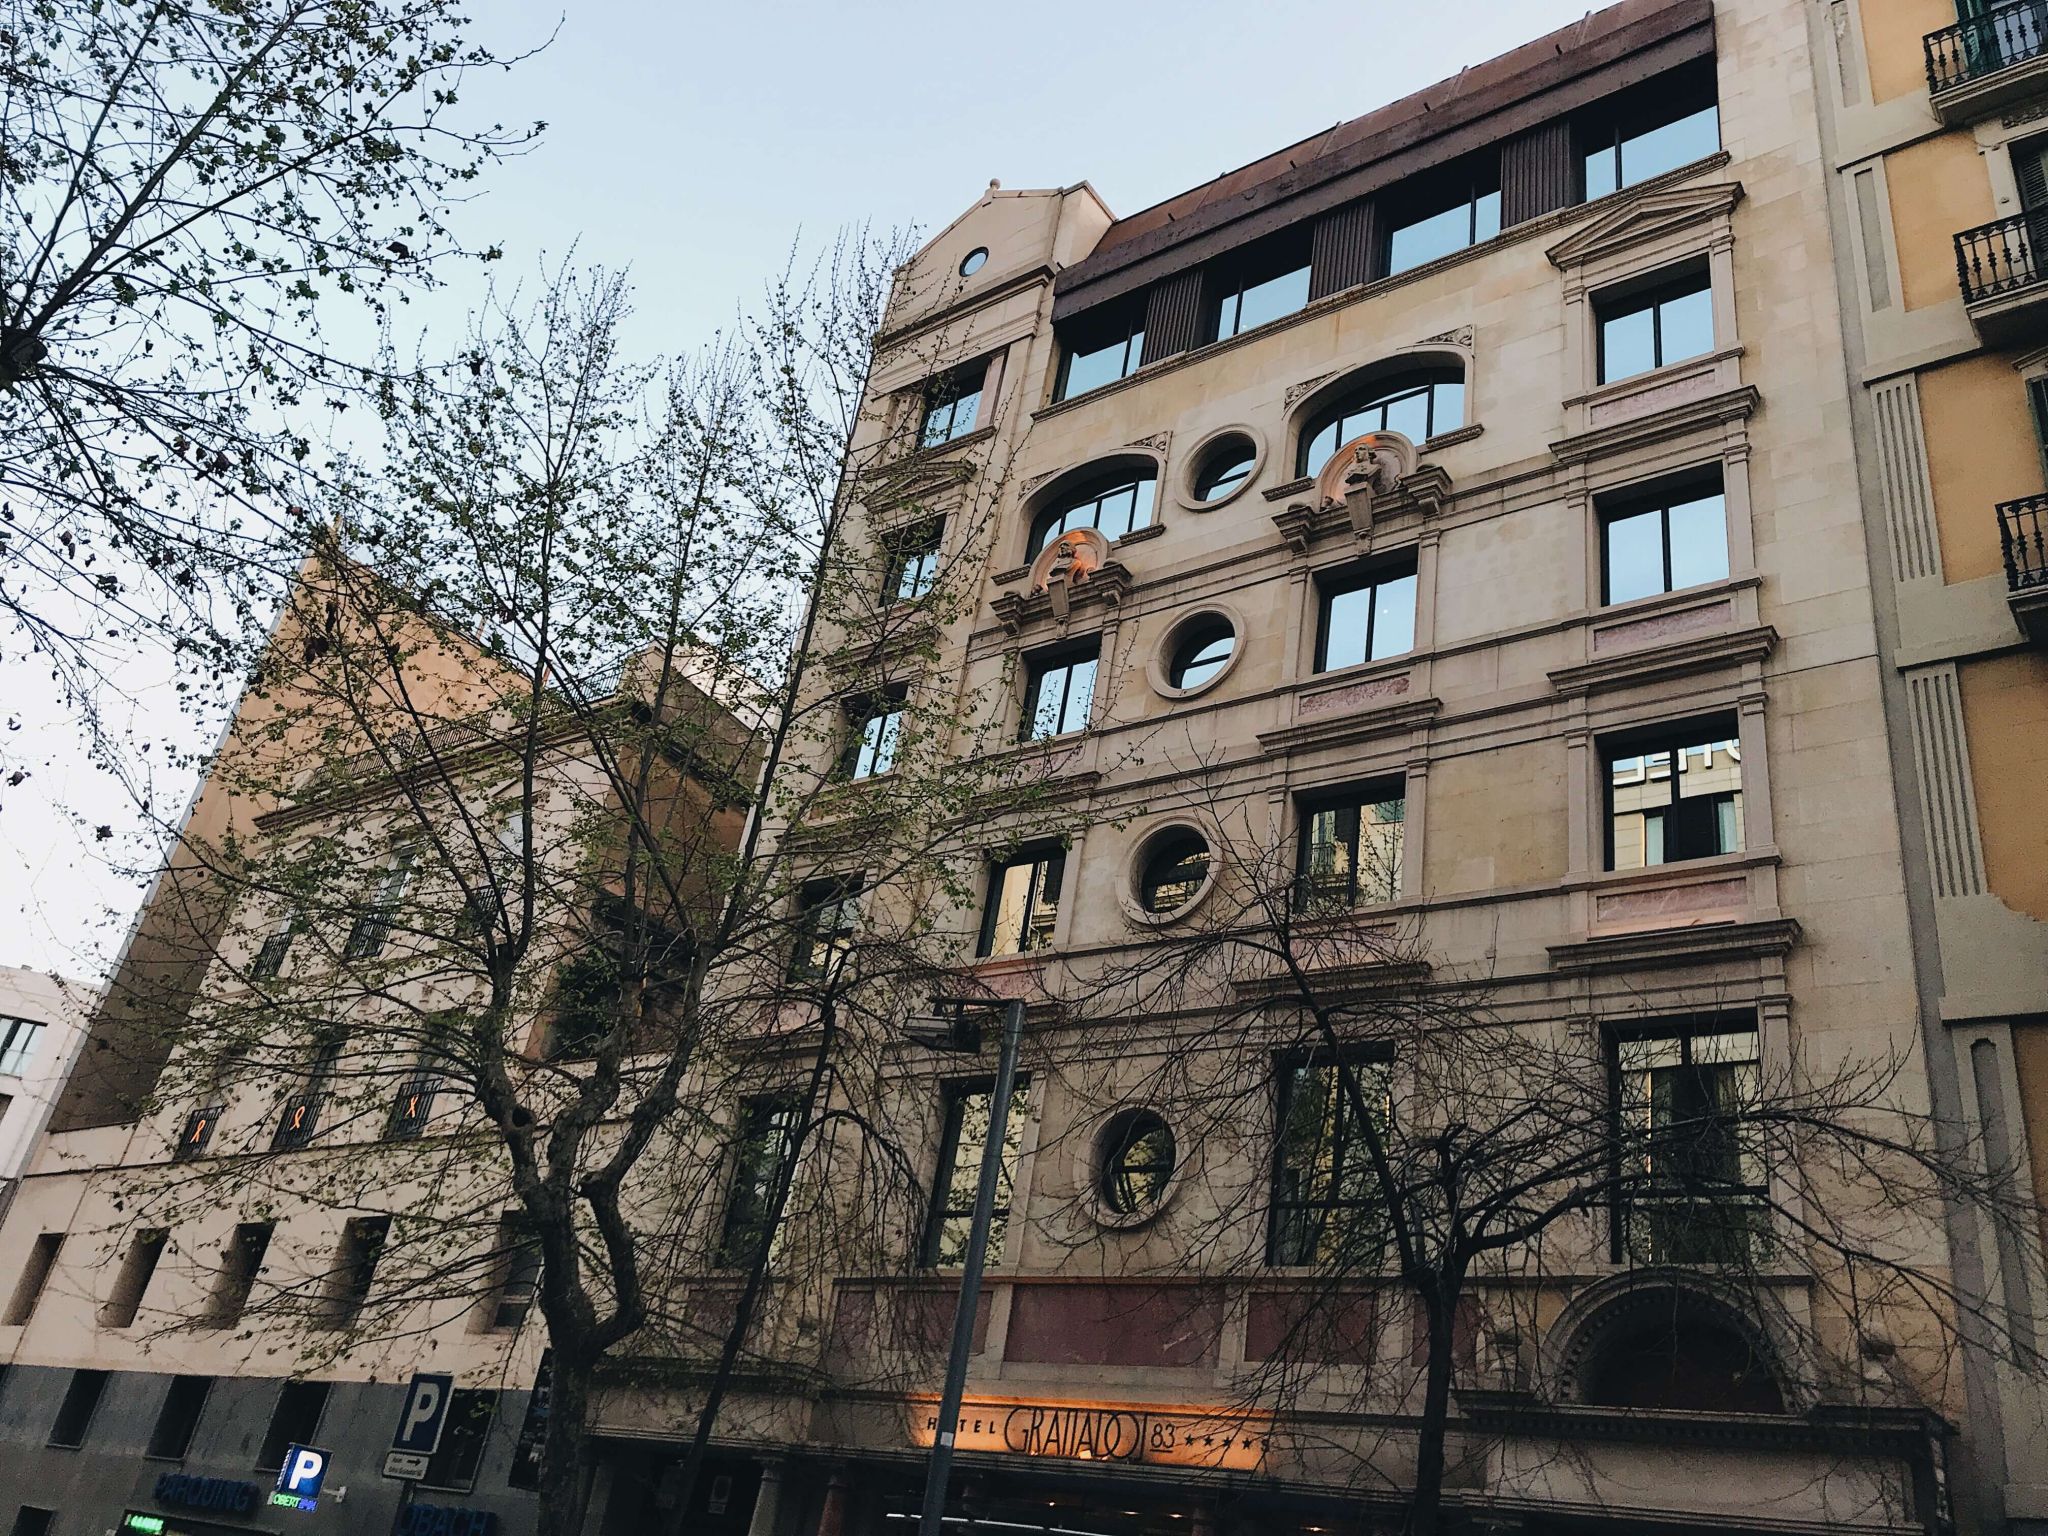 Où loger à Barcelone : Hôtel Granados 83 